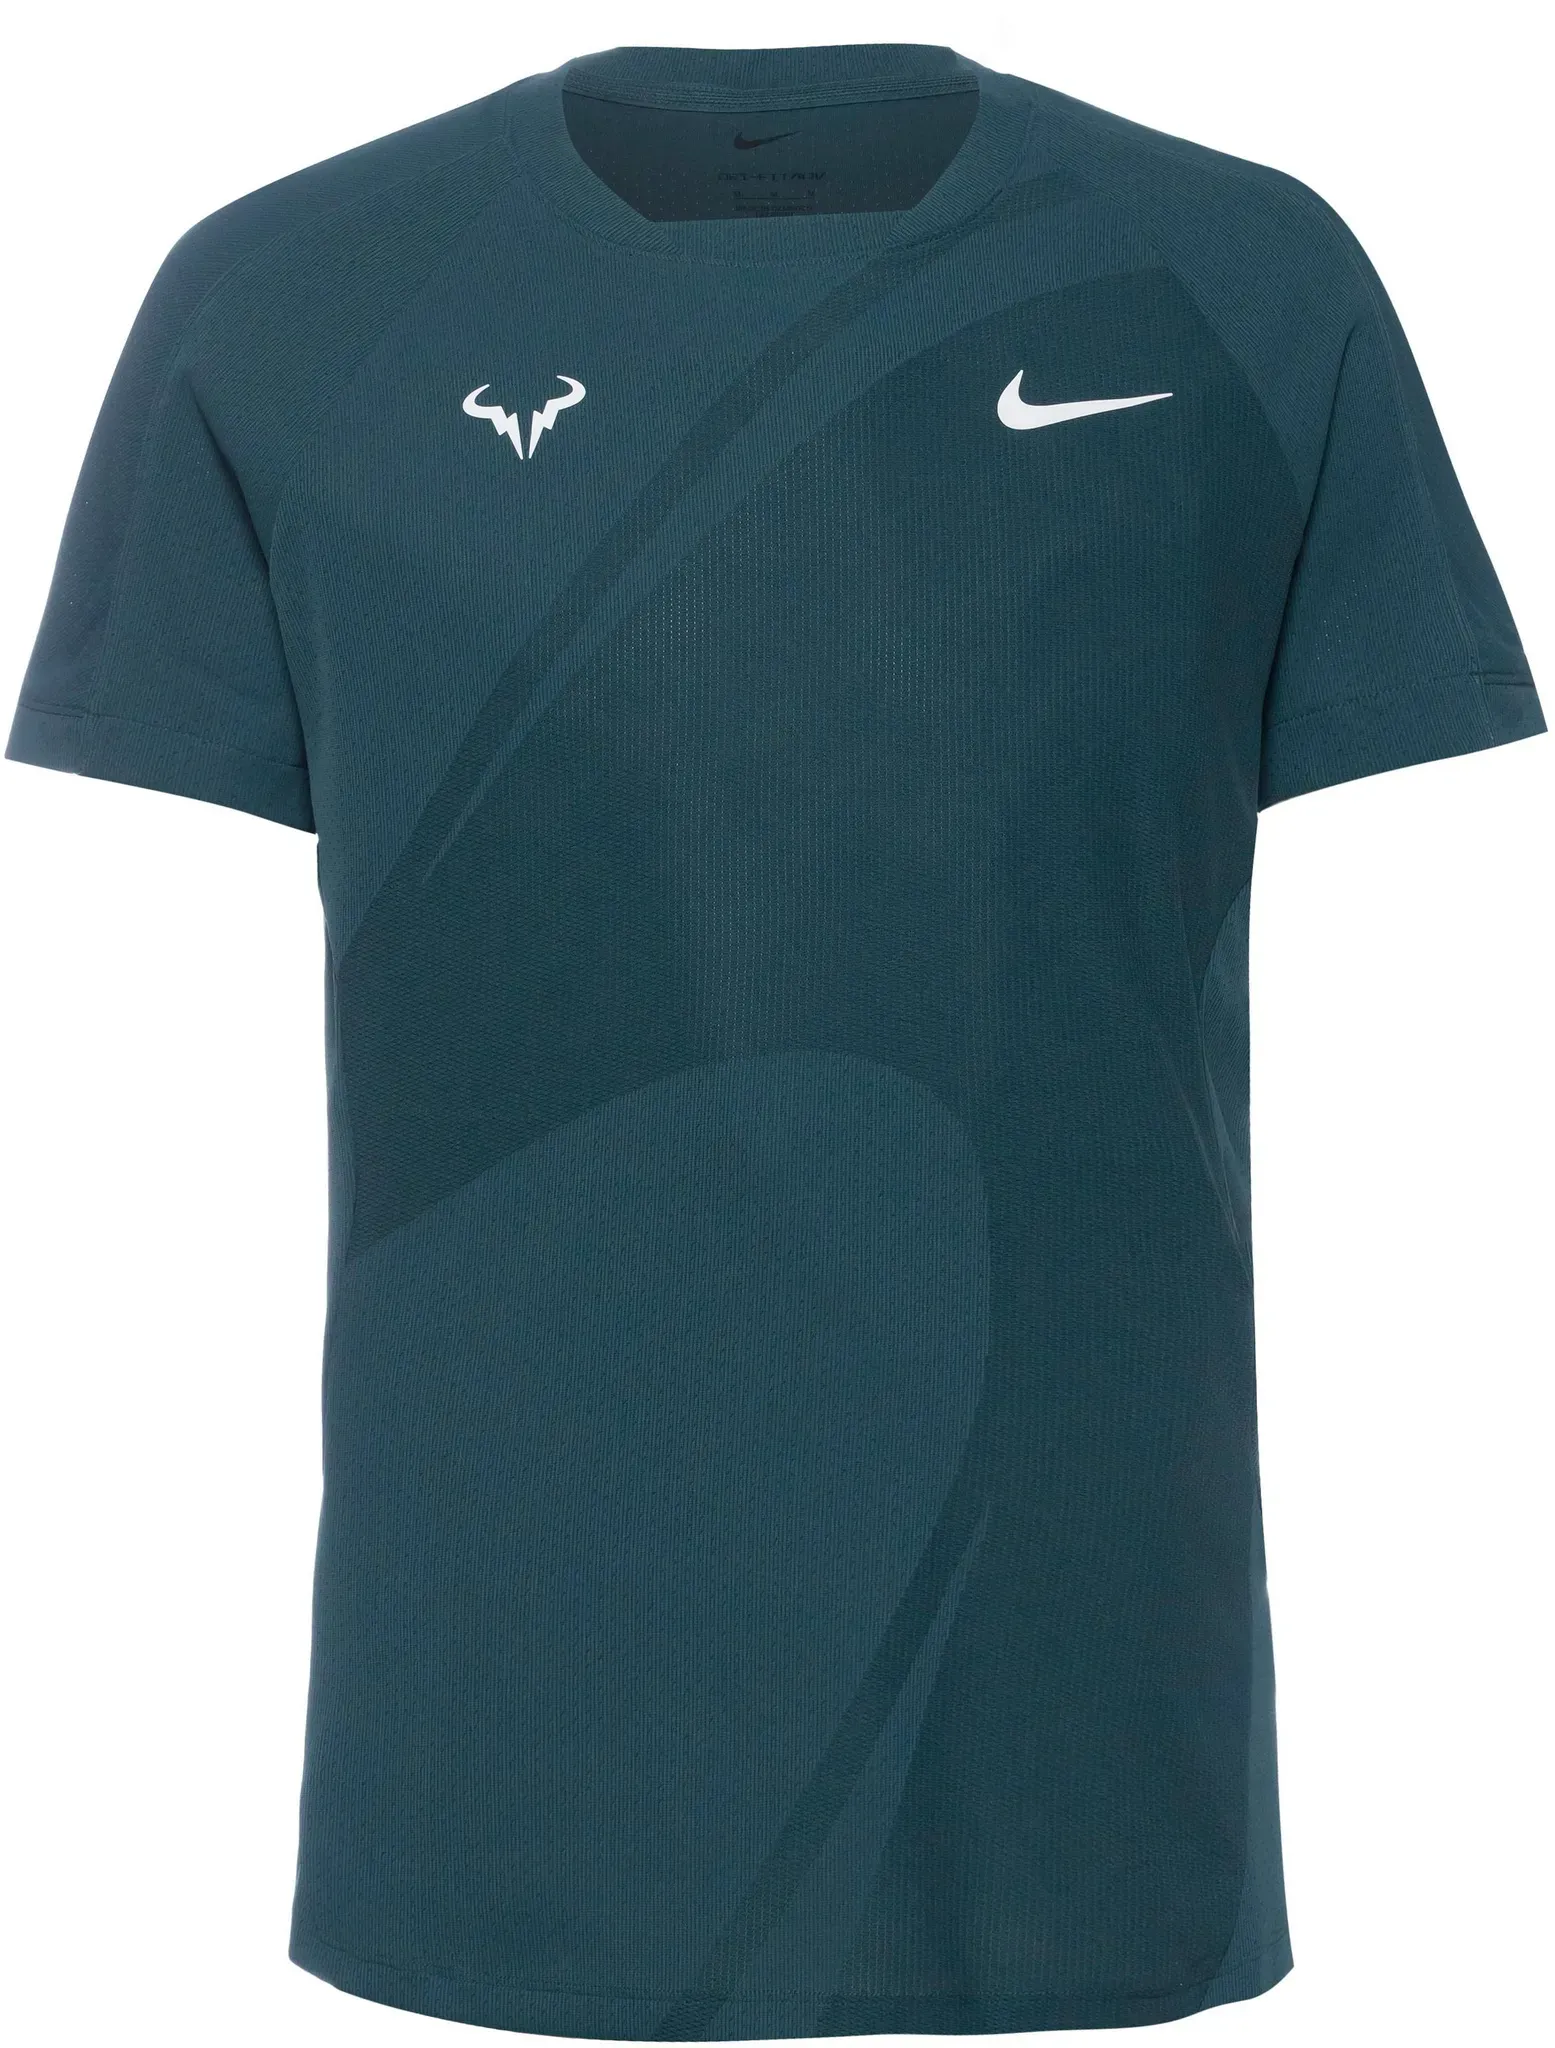 Nike Rafa nadal Advantage Tennisshirt Herren in deep jungle-white, Größe S - grün